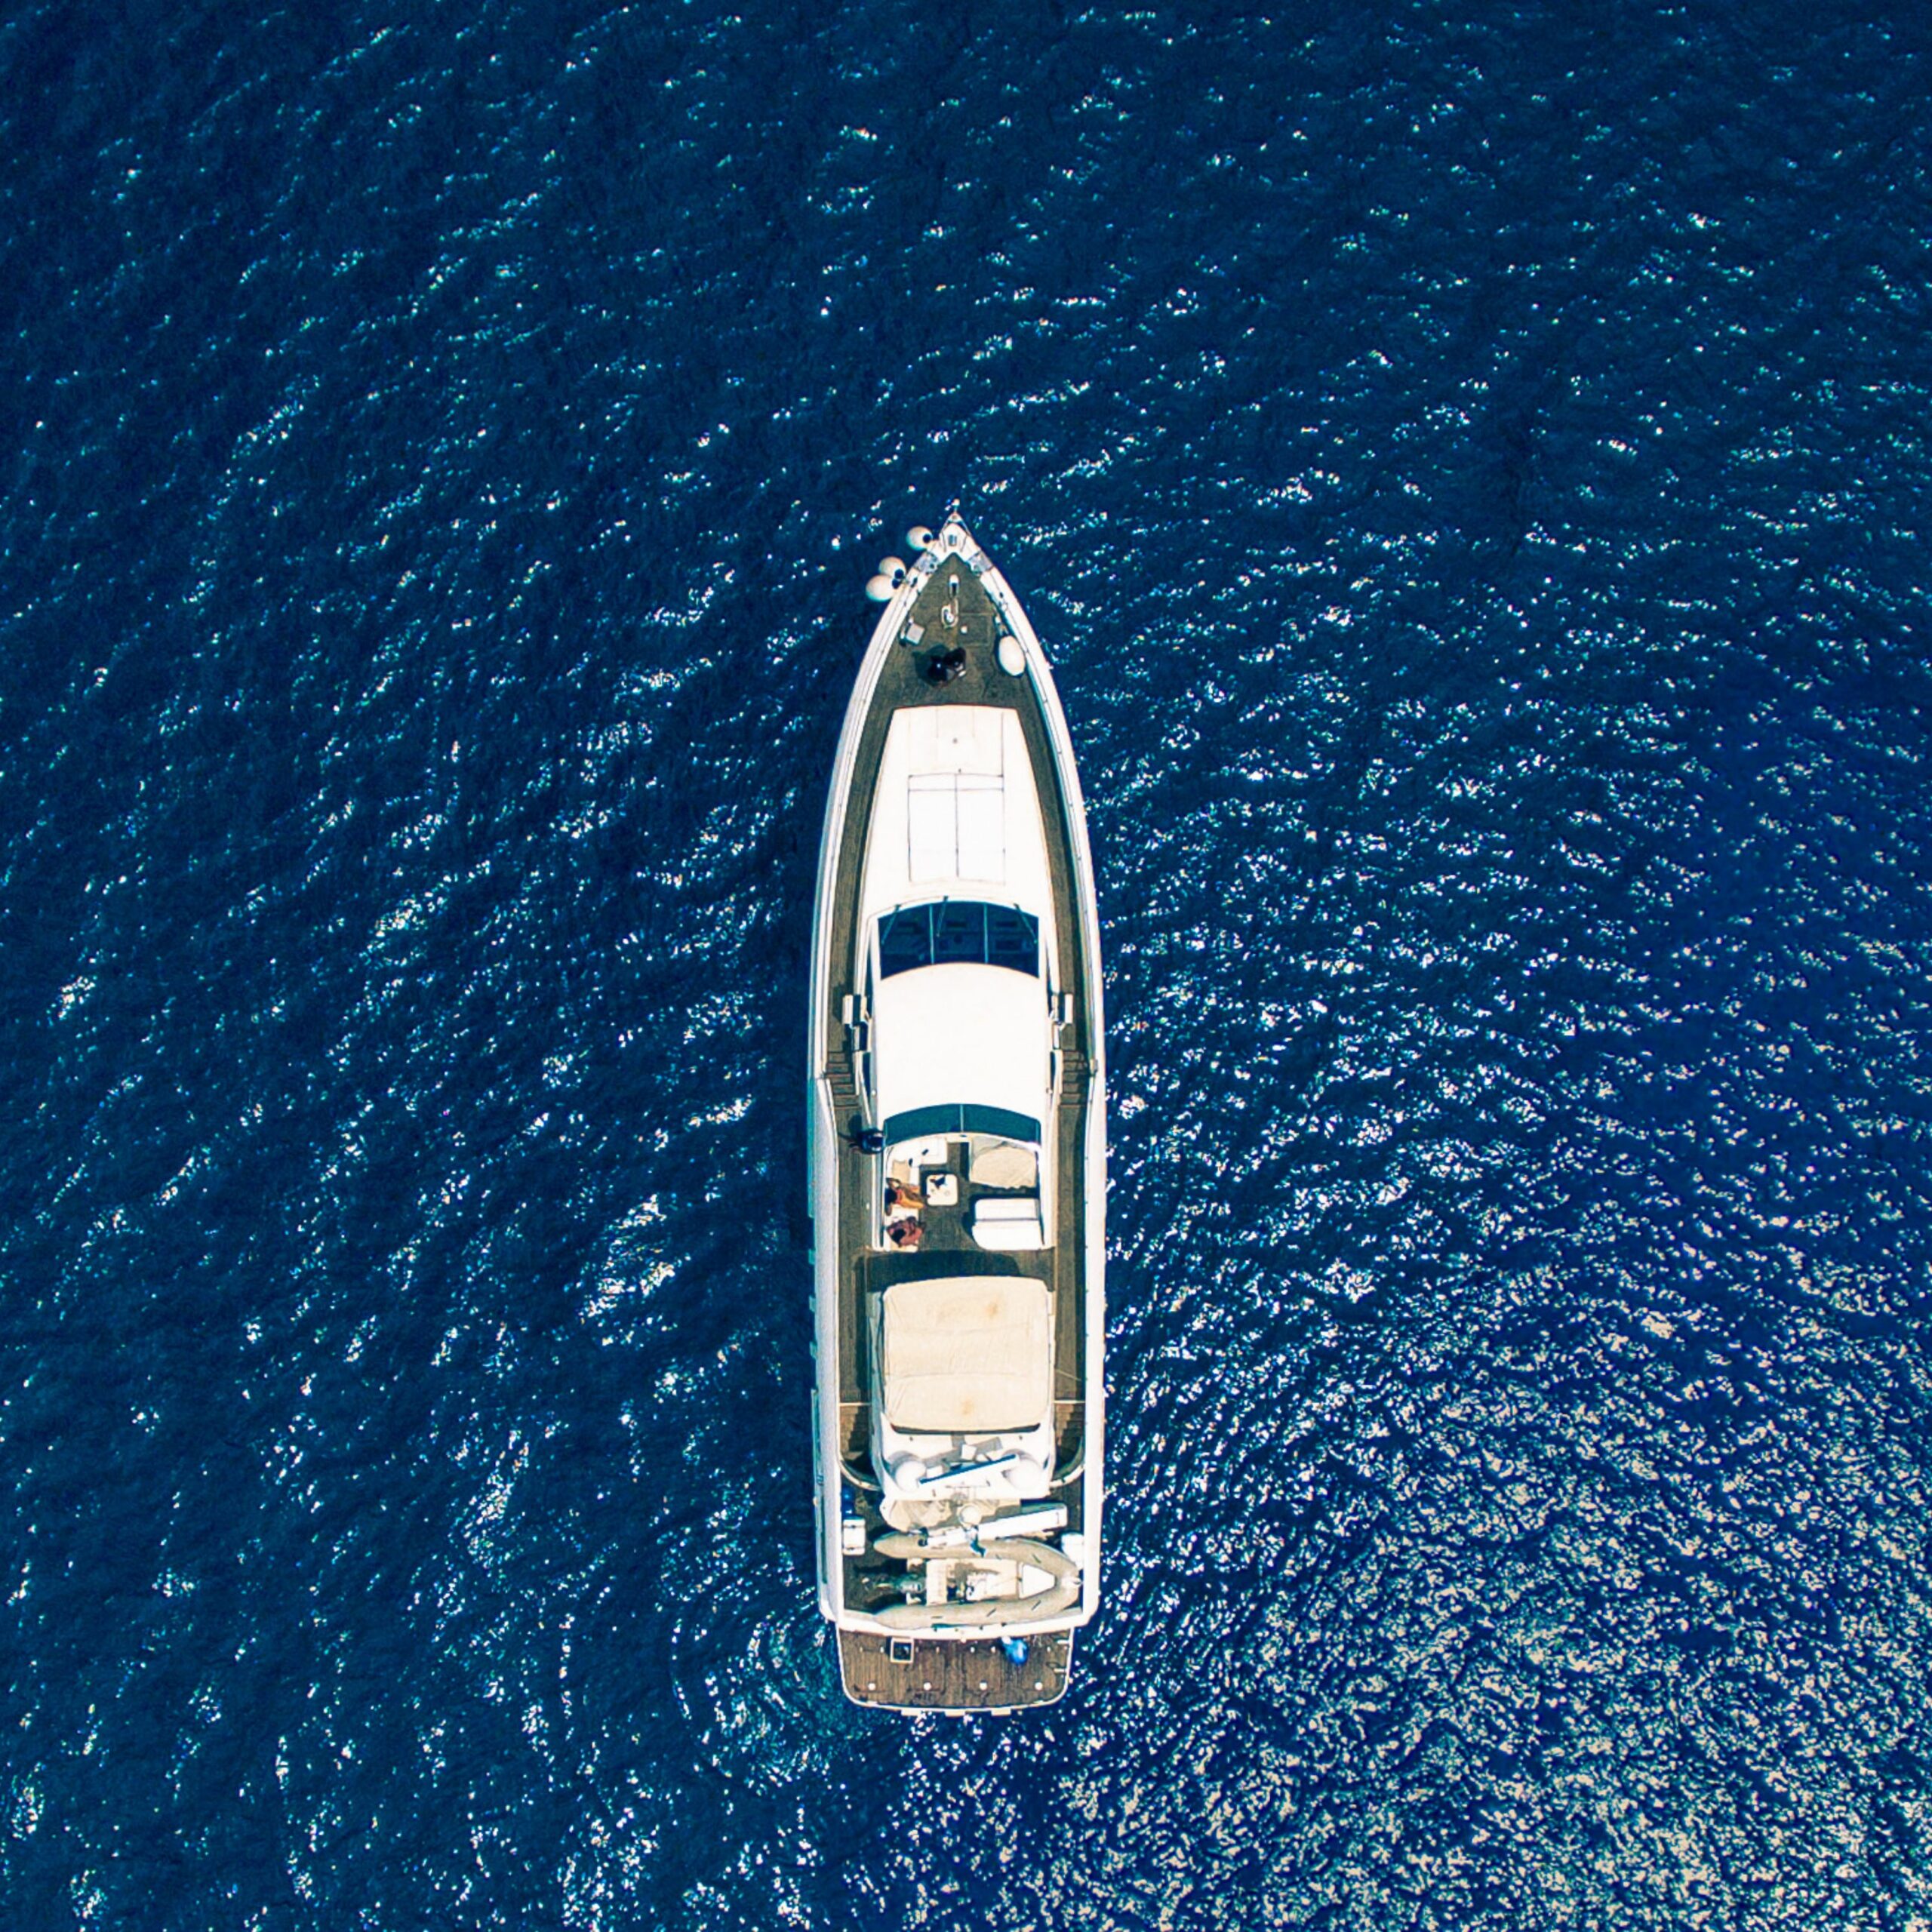 Noleggio-yacht-Sardegna-2